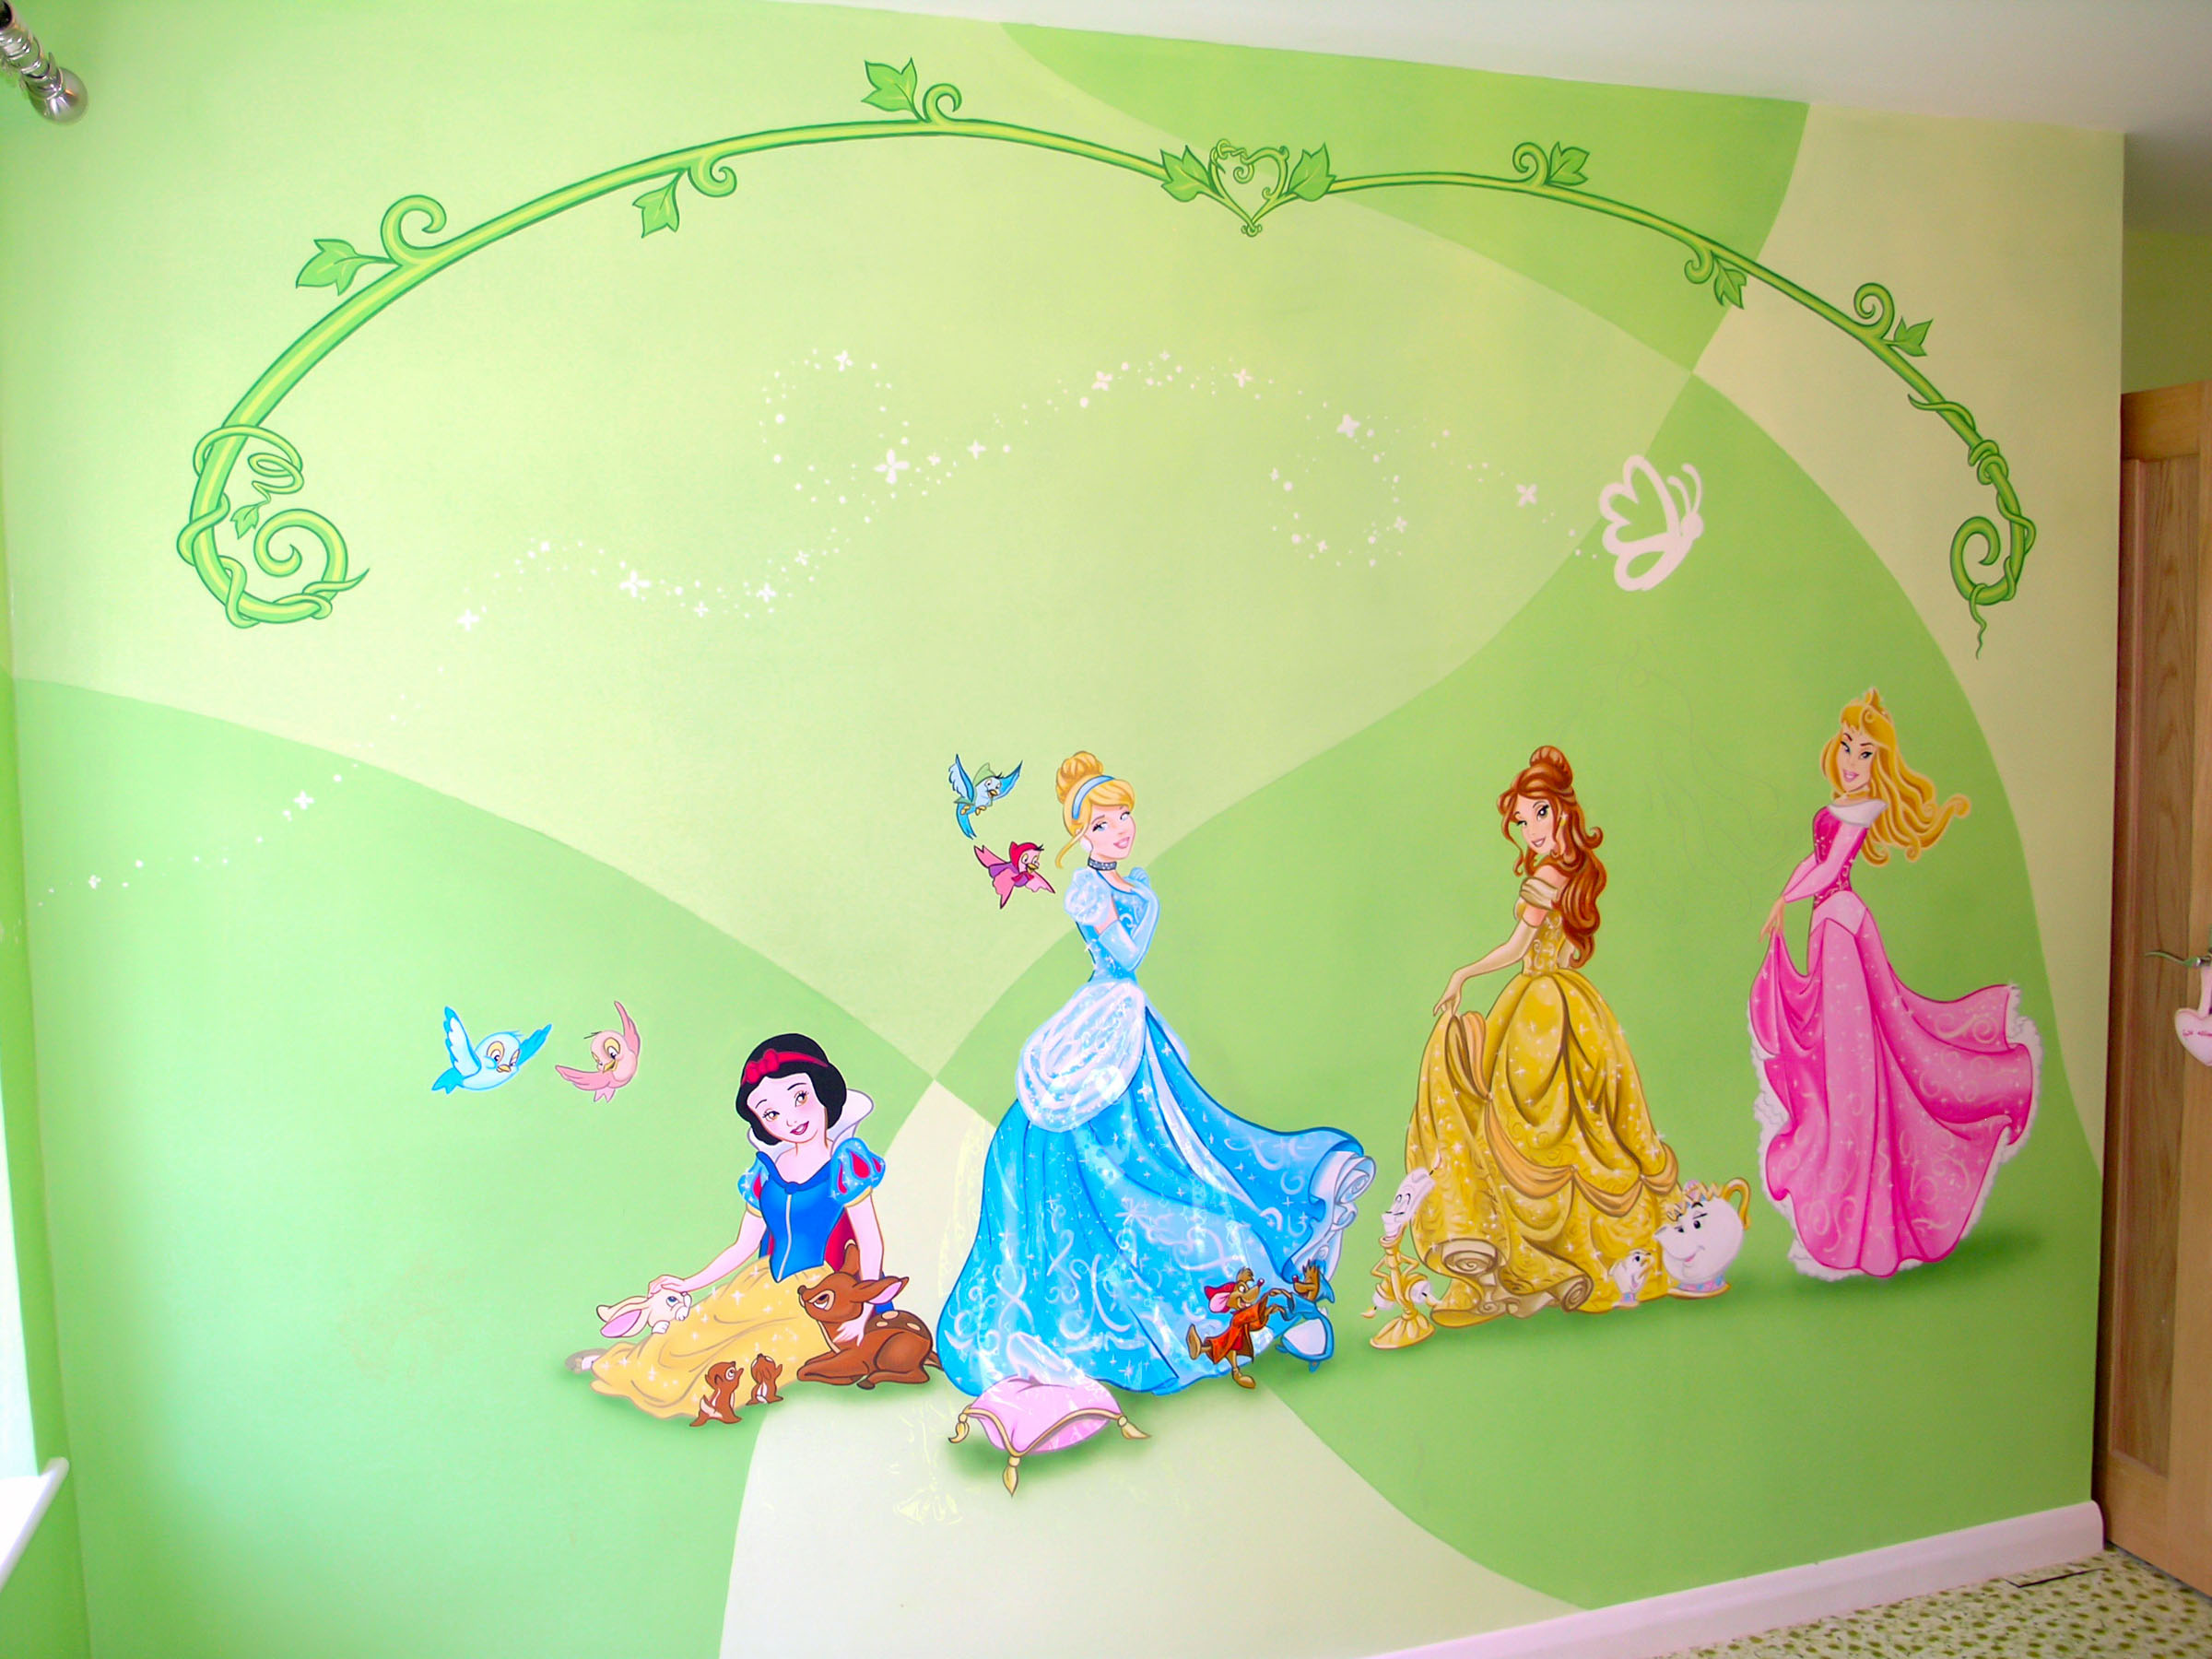 Disney mural in girl's bedroom, main feature wall